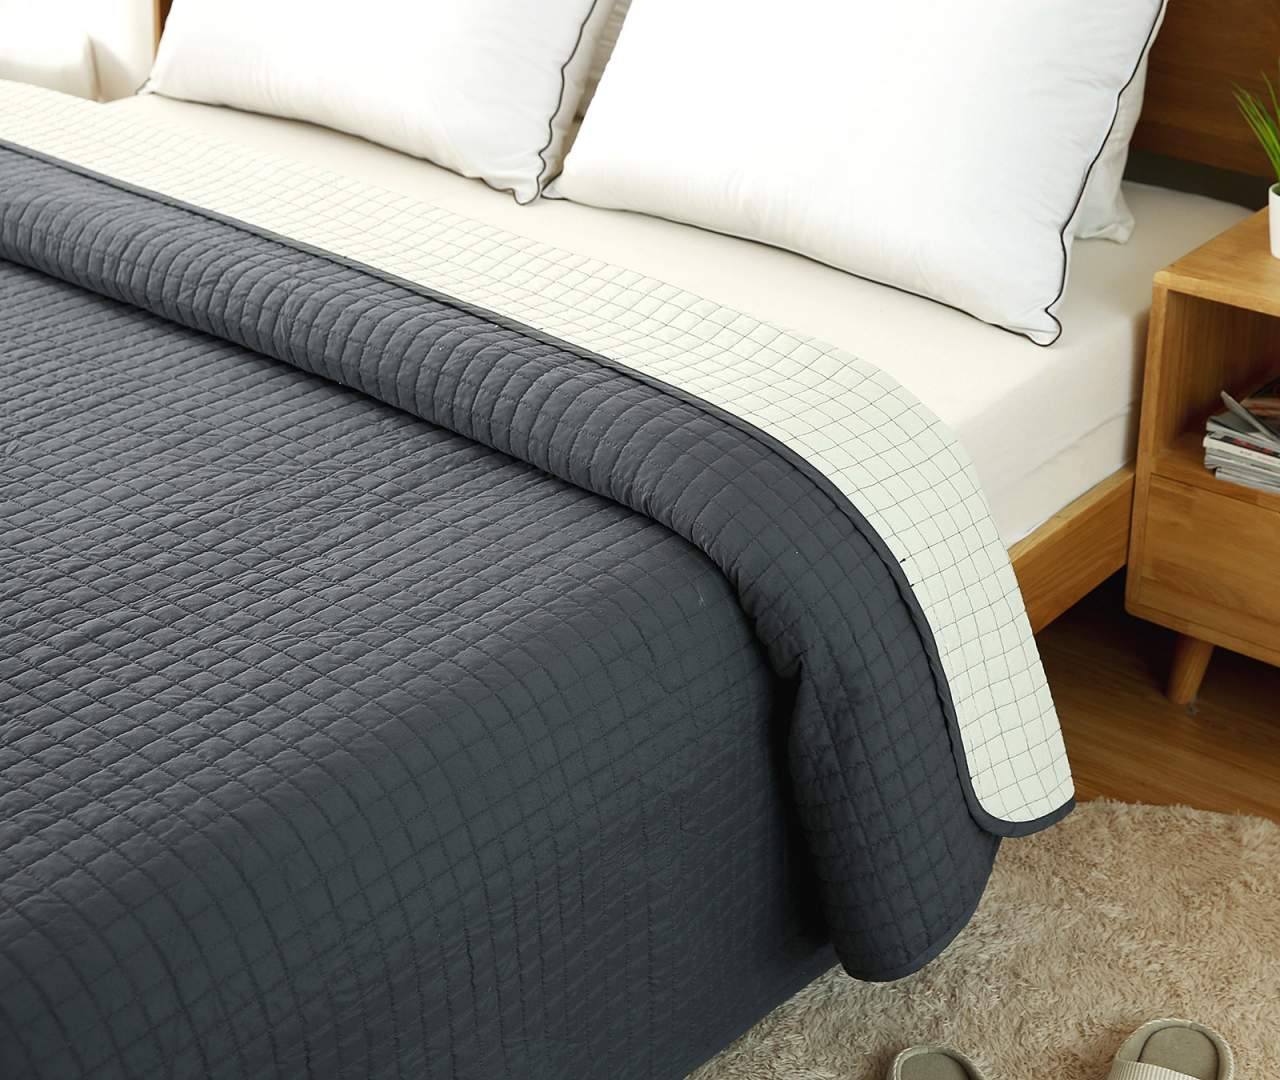 Dark Grey BWP5004gr1 WOLTU Bedspread Quilted Bed Throw Comforter Lightweight Coverlet Check Pattern 170x210cm 